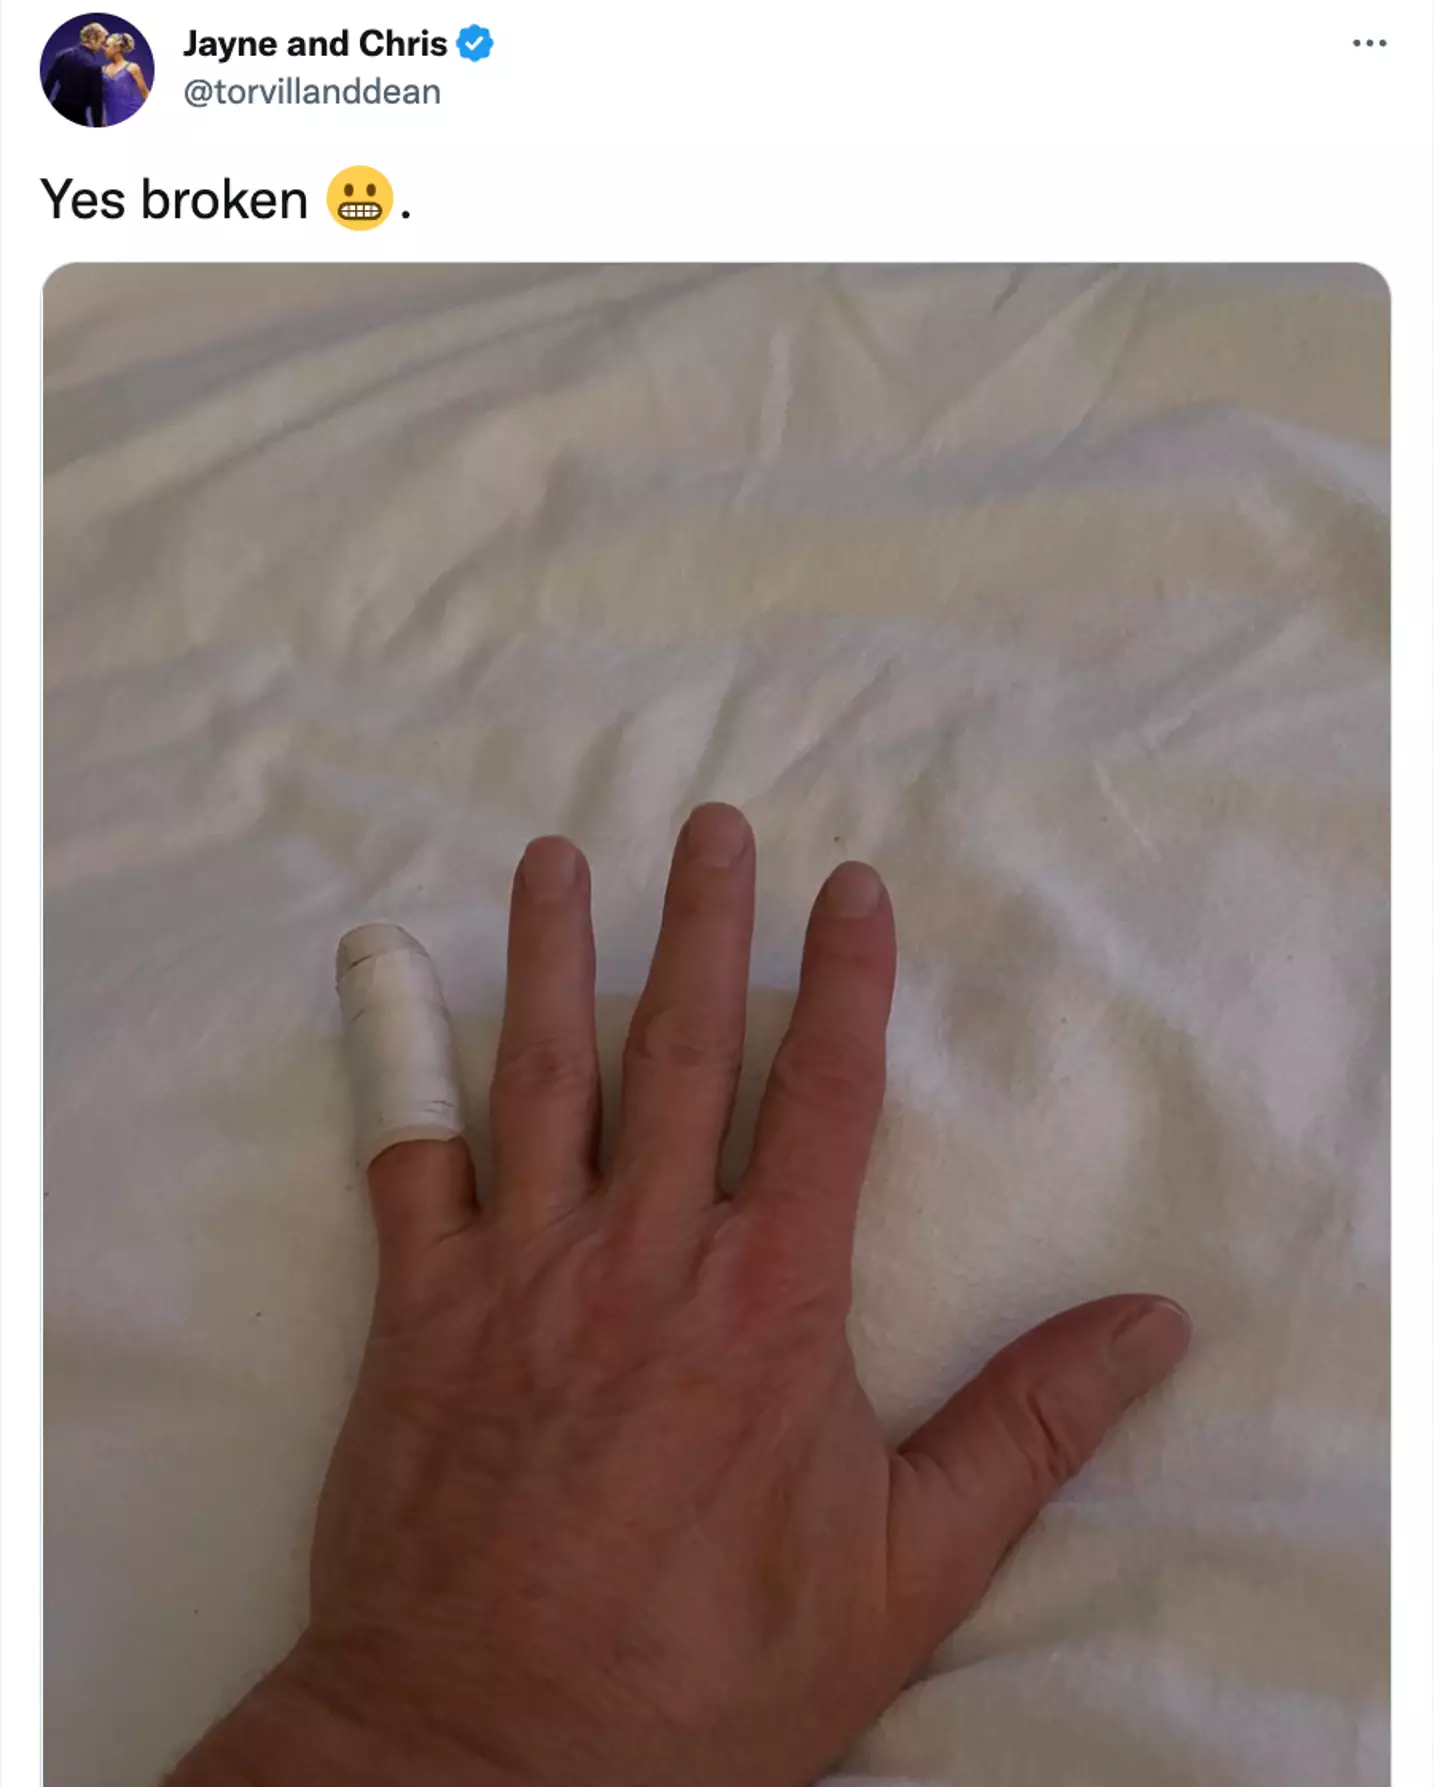 Dean broke his finger in the unfortunate accident.